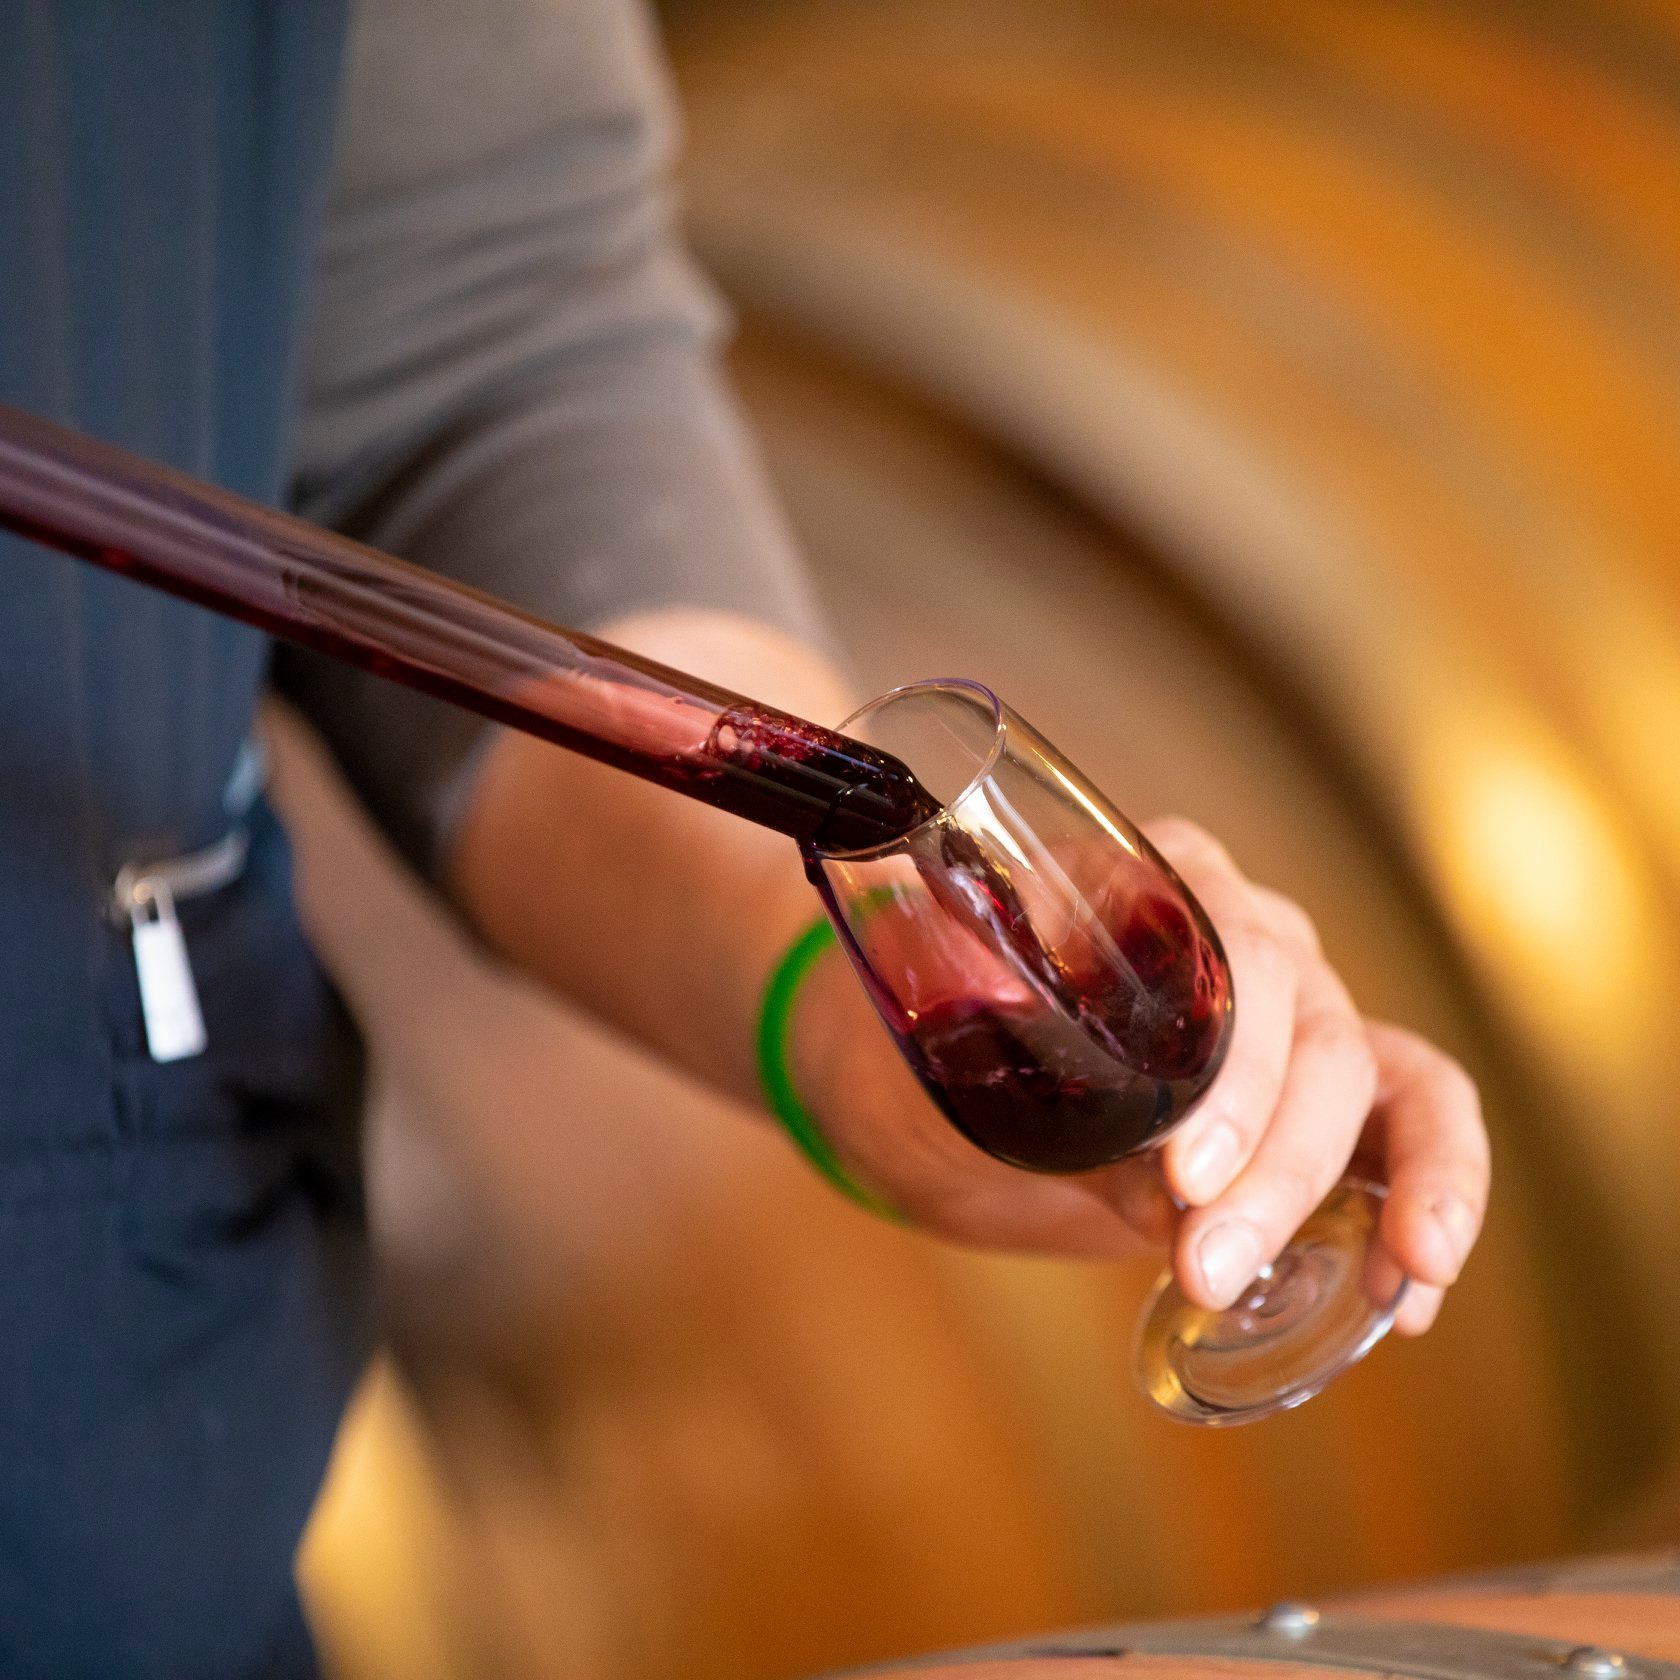 Wine heals: Friuli charity wine helps Udine Hospital